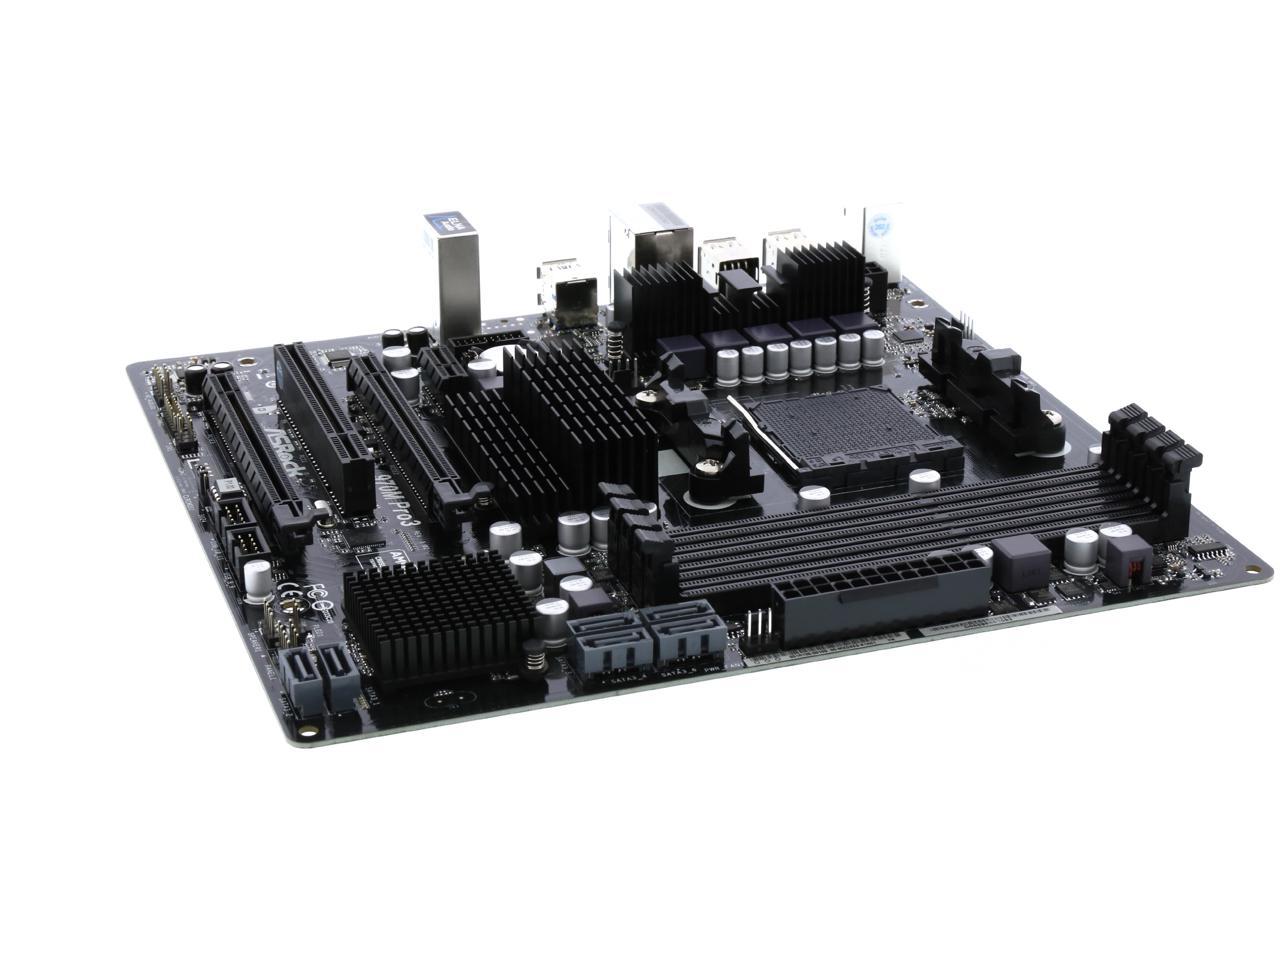 ASRock 970M Pro3 AM3+/AM3 Micro ATX AMD Motherboard - Newegg.com